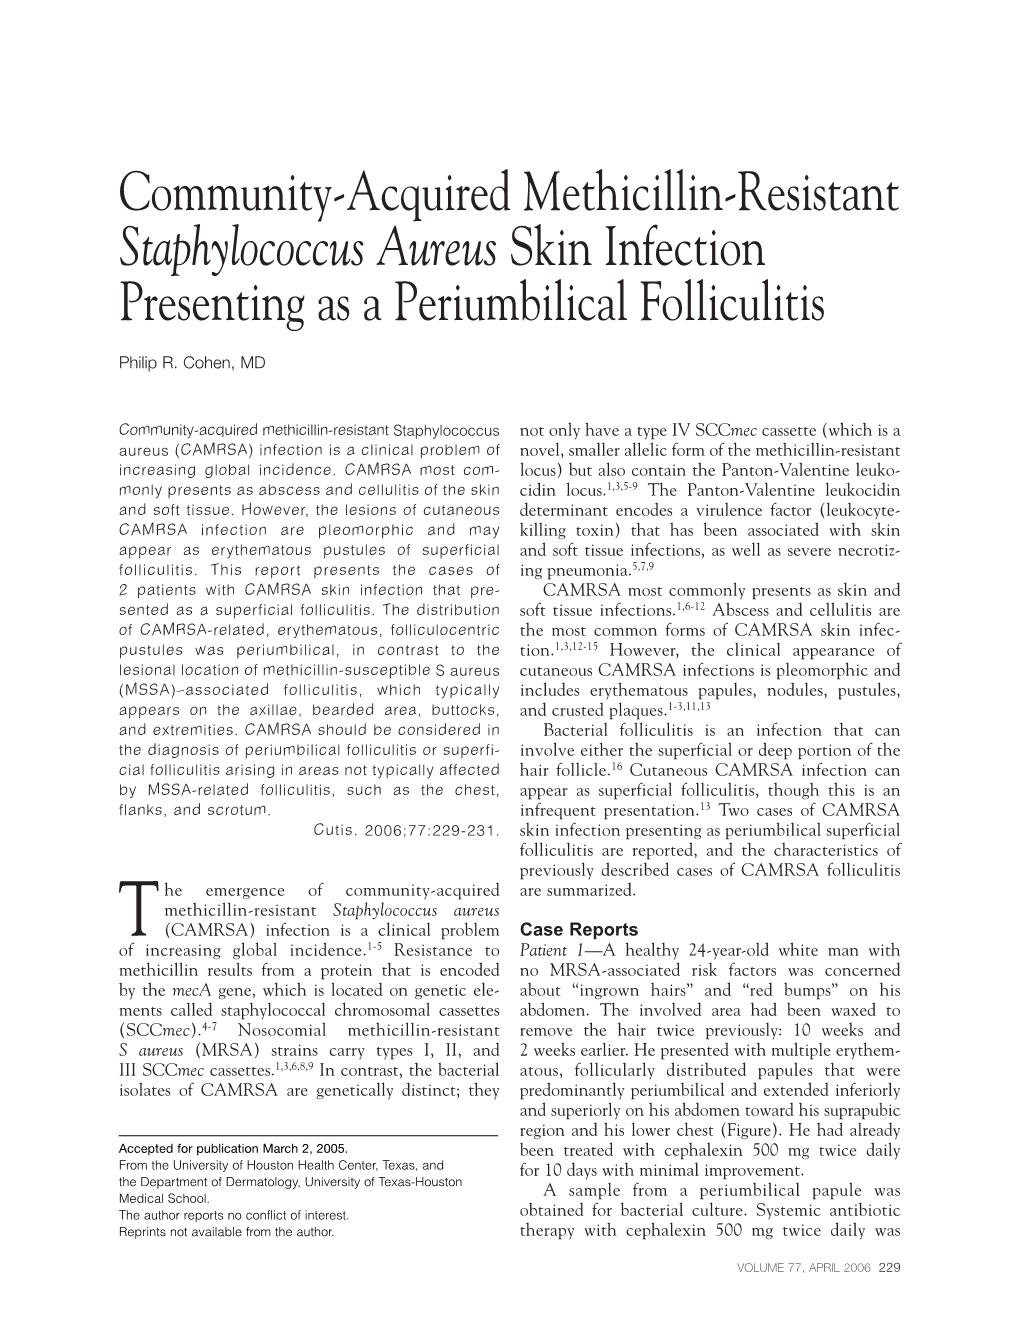 Community-Acquired Methicillin-Resistant Staphylococcus Aureus Skin Infection Presenting As a Periumbilical Folliculitis